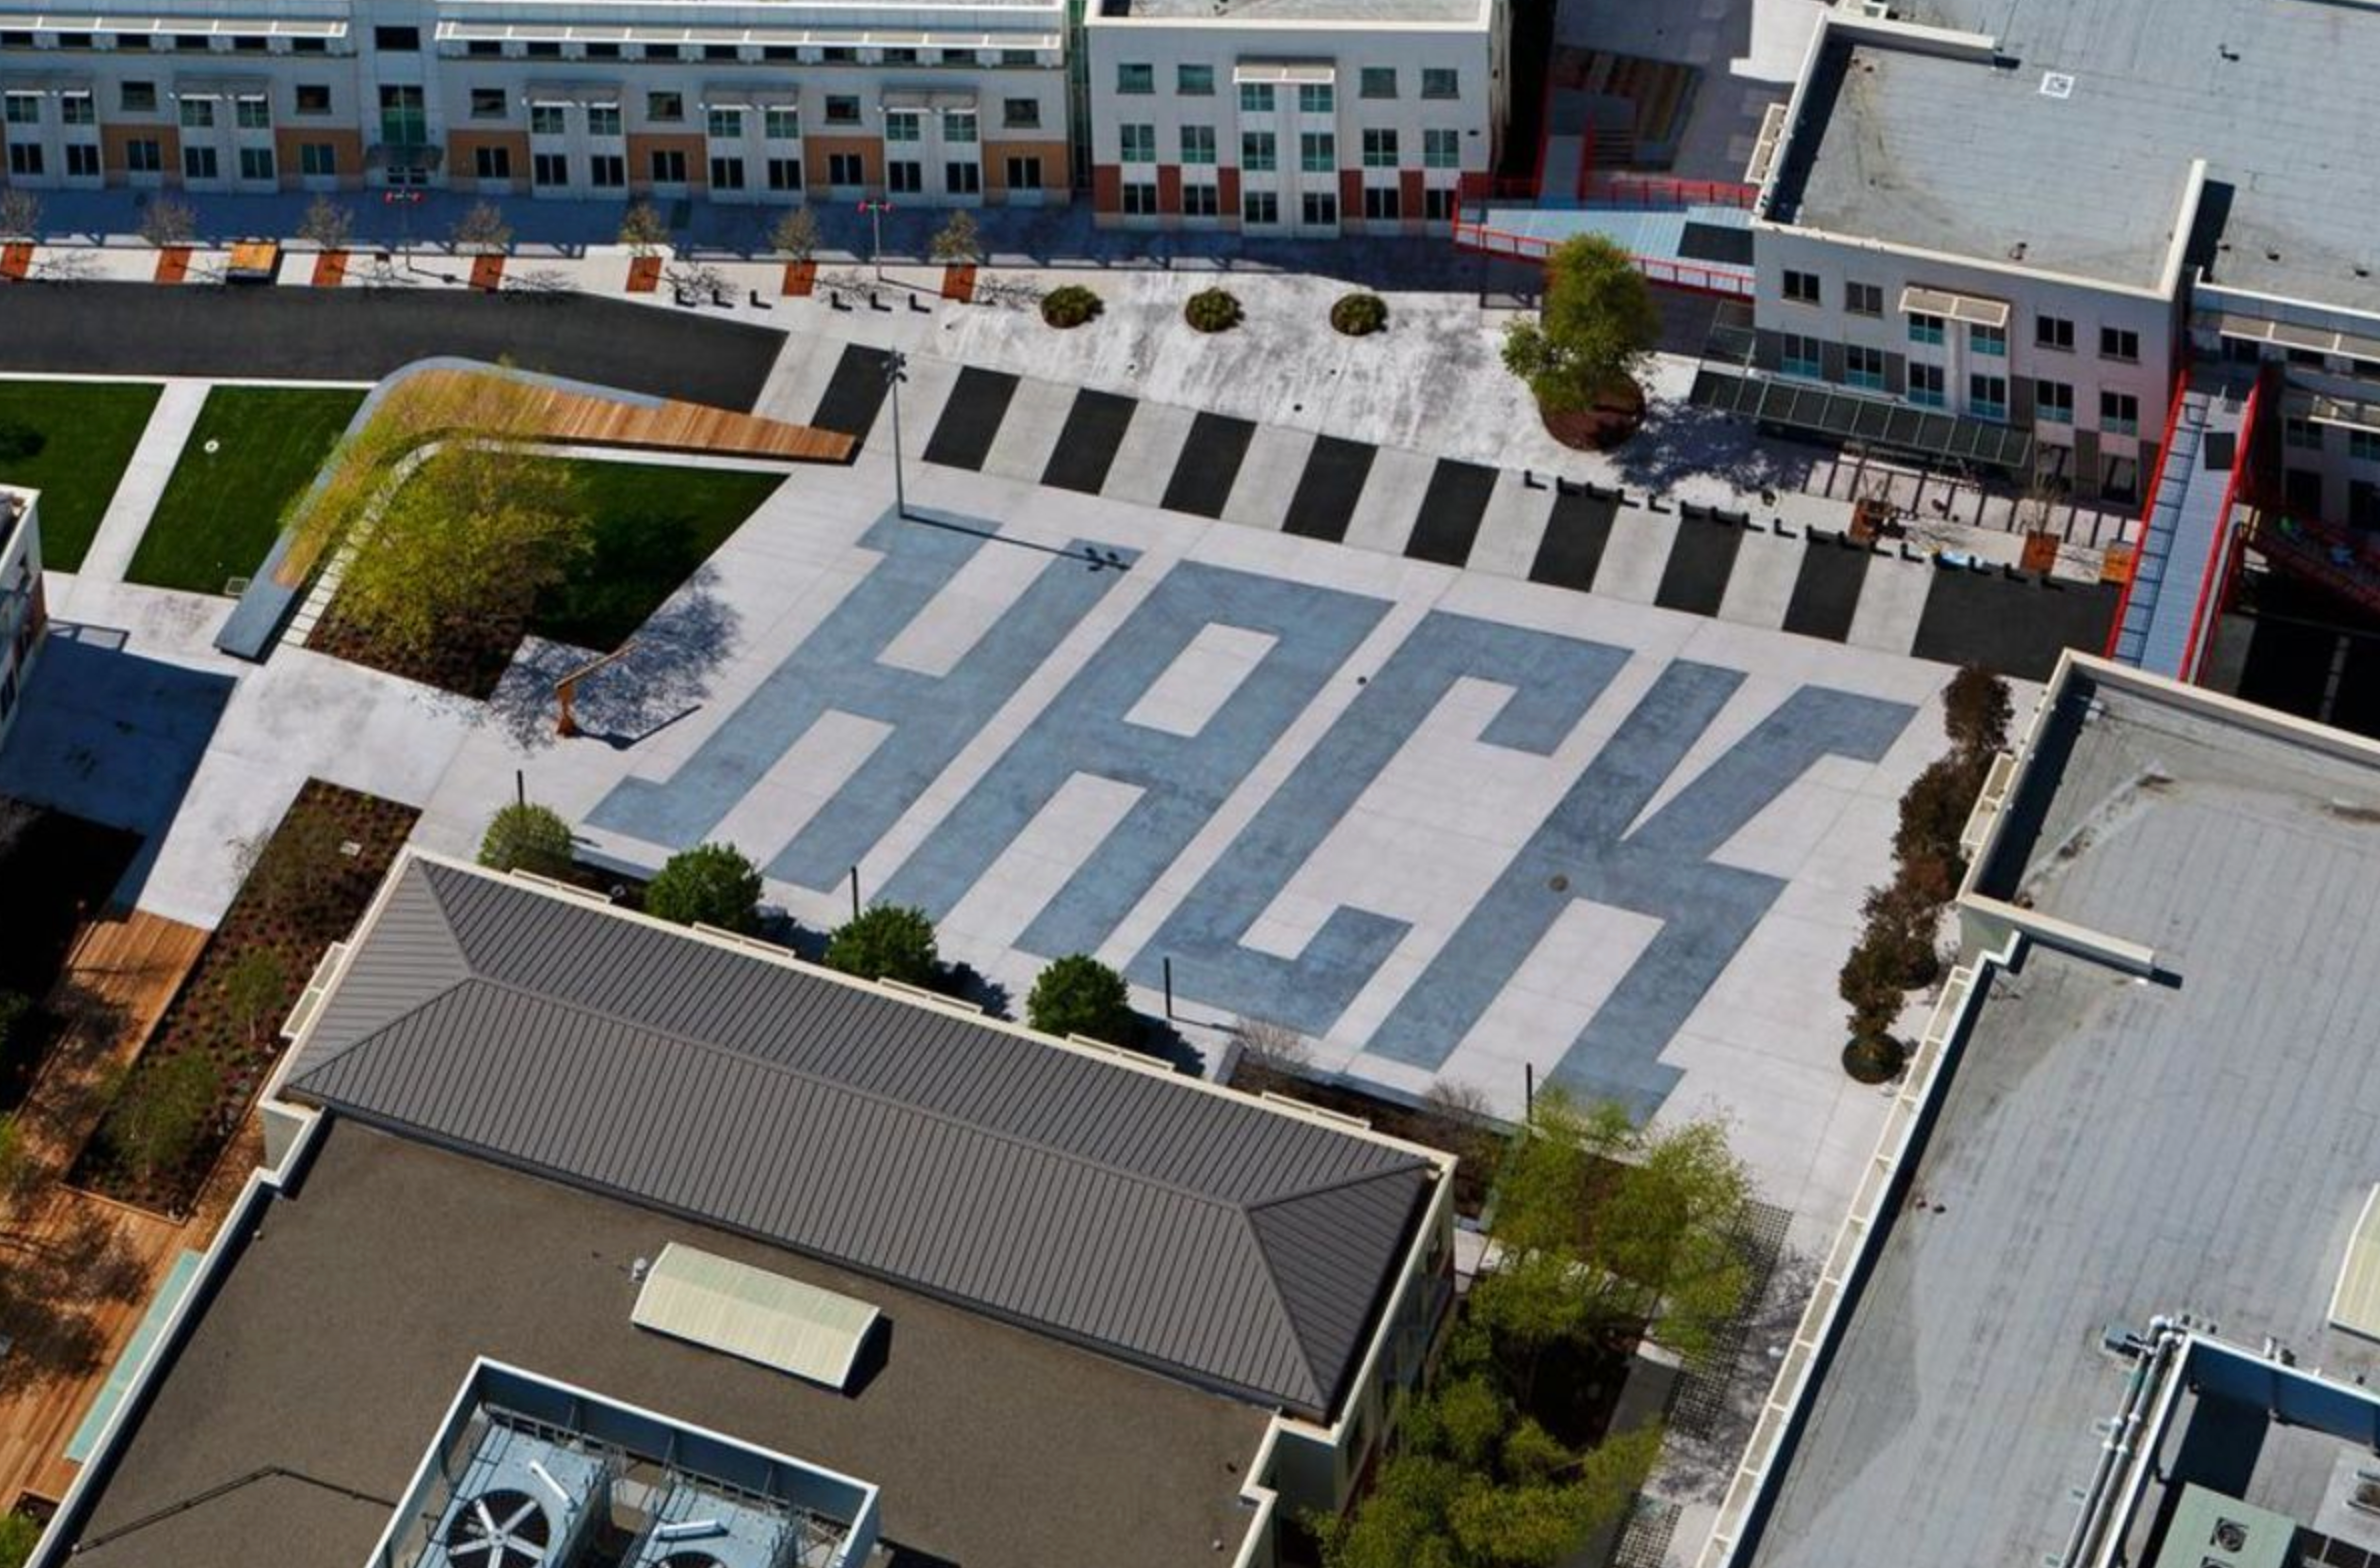 Facebook 的企业园区在混凝土上用巨大的字母写着 “hack” 一词（图片来源：彭博社）